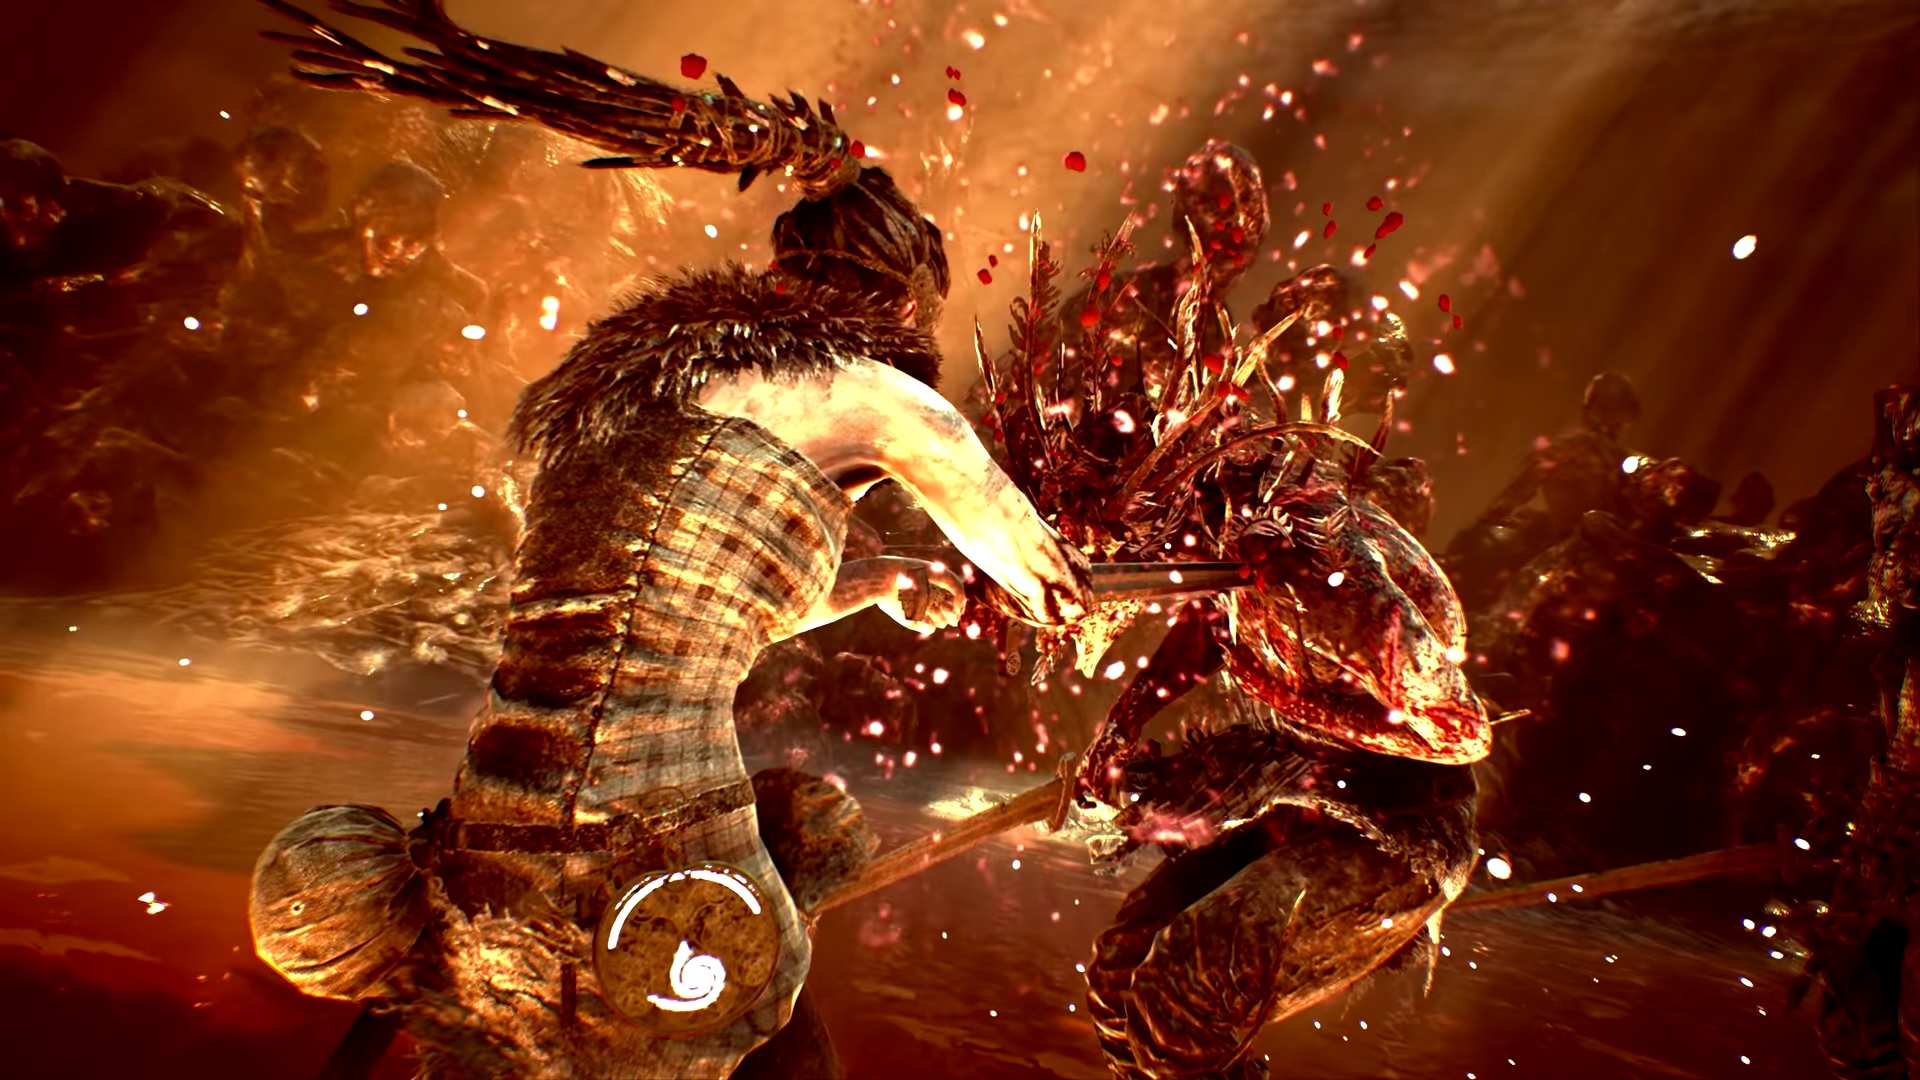 Hellblade: Senua's Sacrifice VR Edition - PCGamingWiki PCGW - bugs